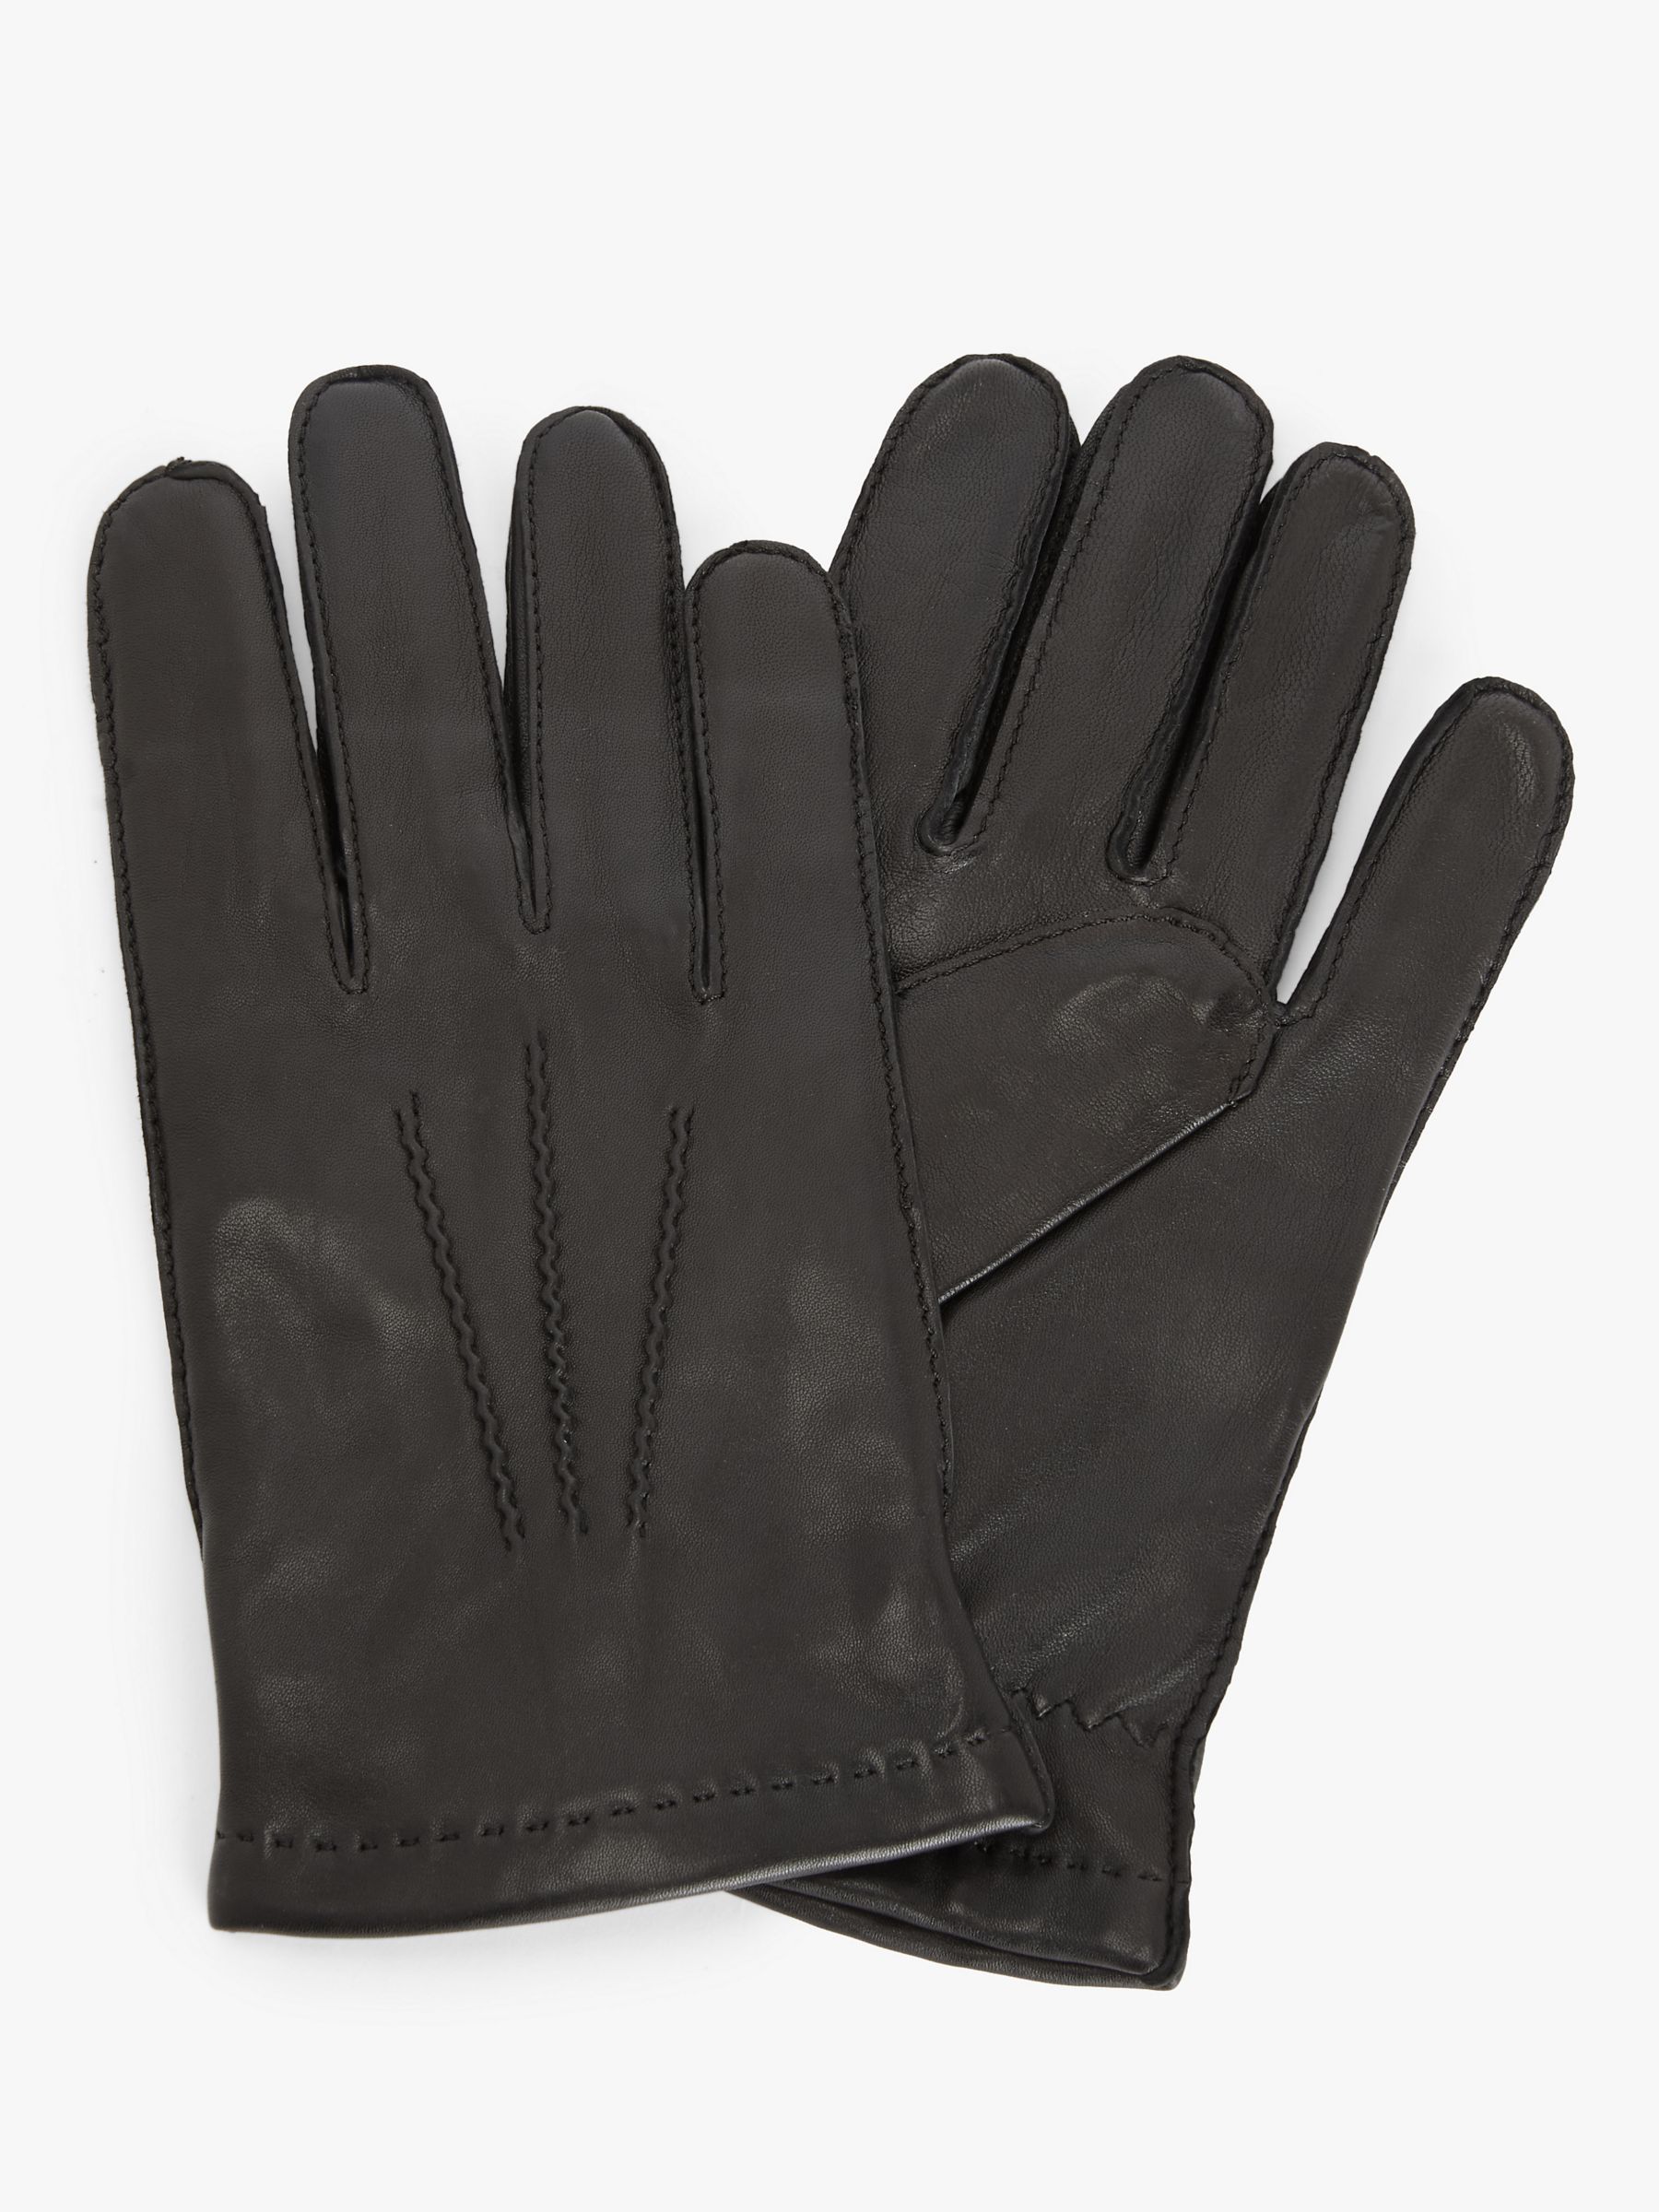 John Lewis Merino Wool Leather Gloves, Black, S